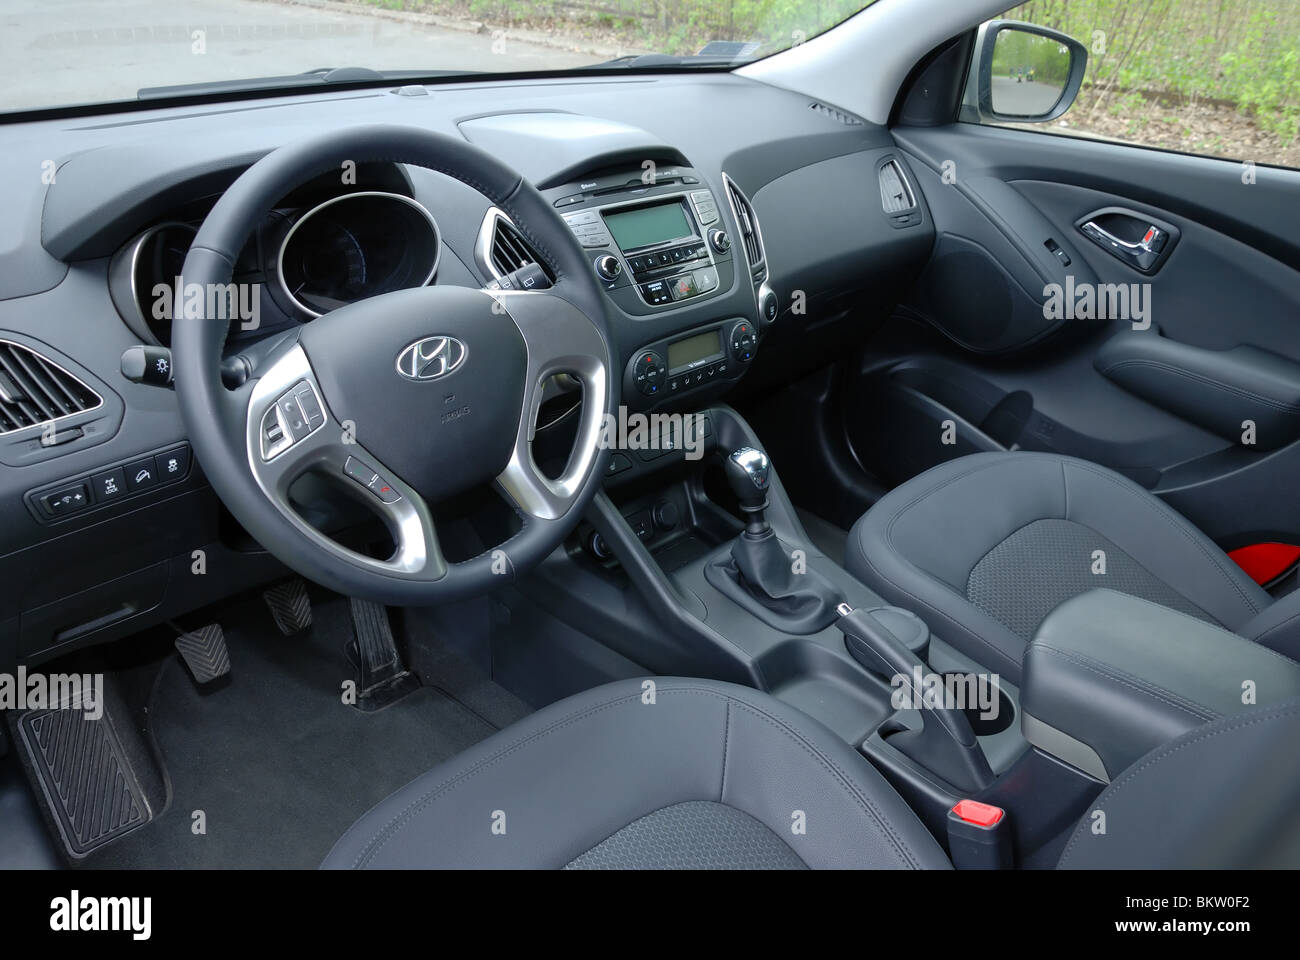 Hyundai ix35 hi-res stock photography and images - Alamy